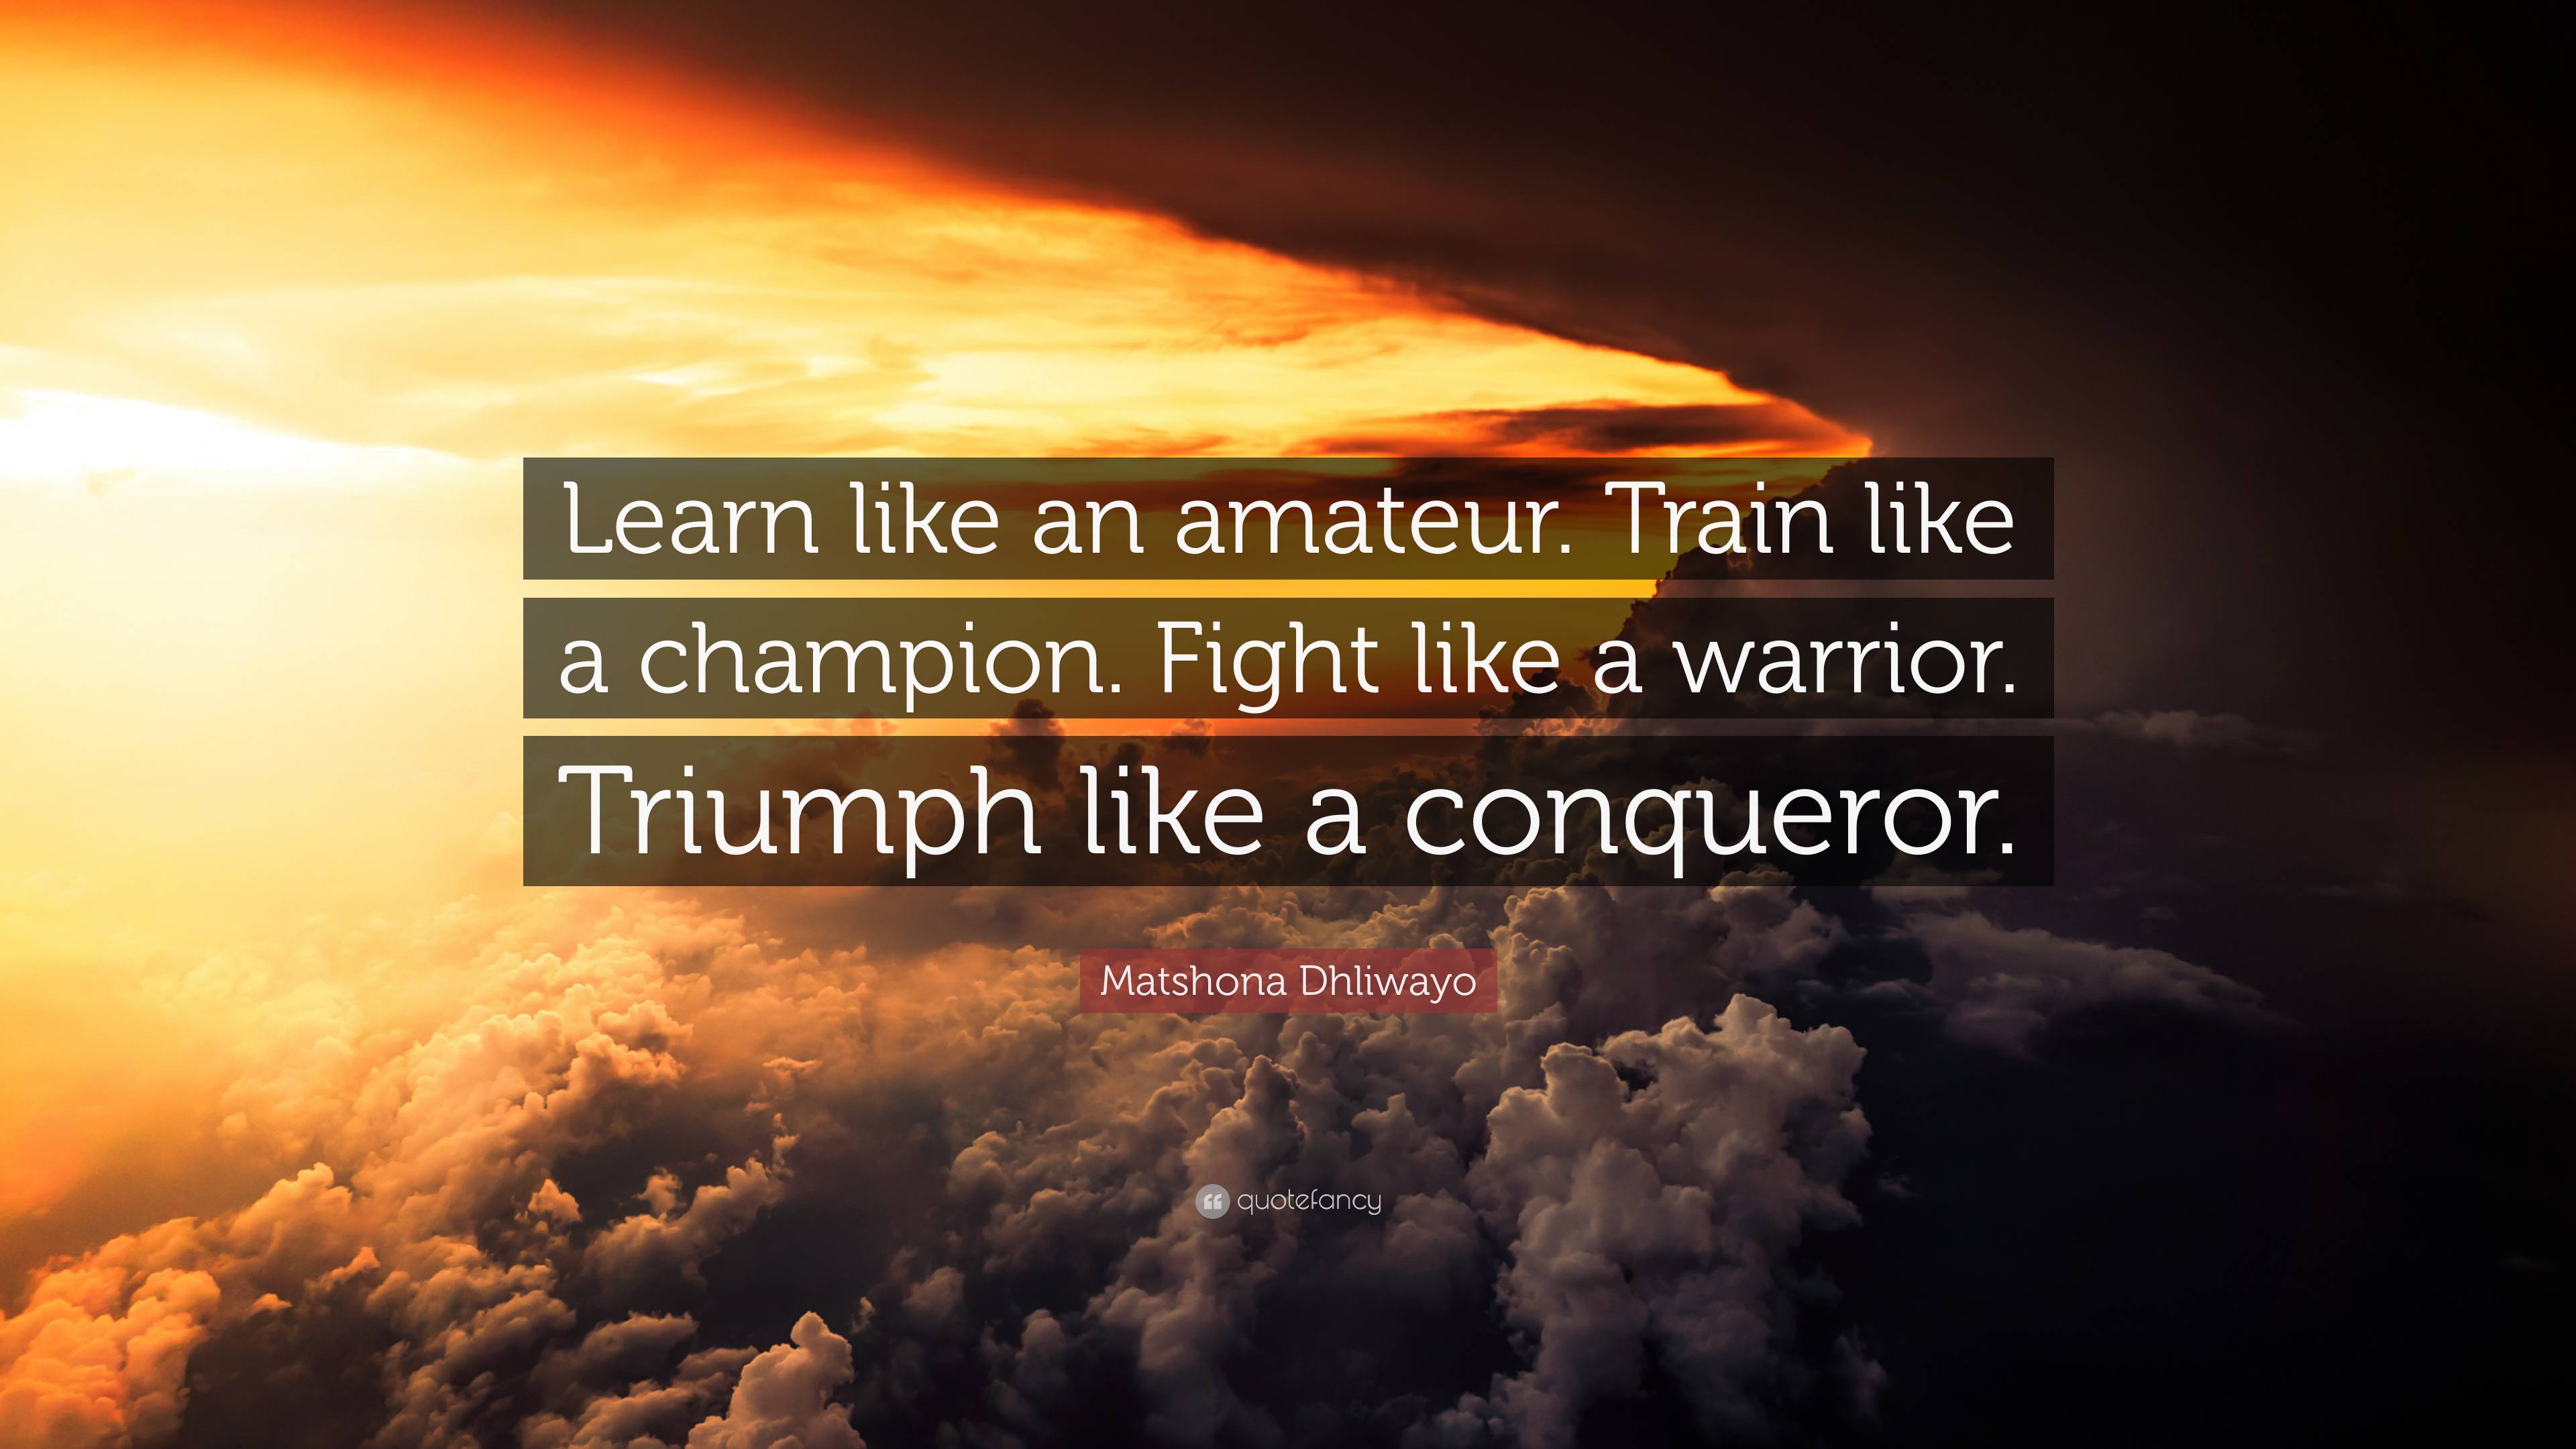 https://quotefancy.com/media/wallpaper/3840x2160/7362985-Matshona-Dhliwayo-Quote-Learn-like-an-amateur-Train-like-a.jpg